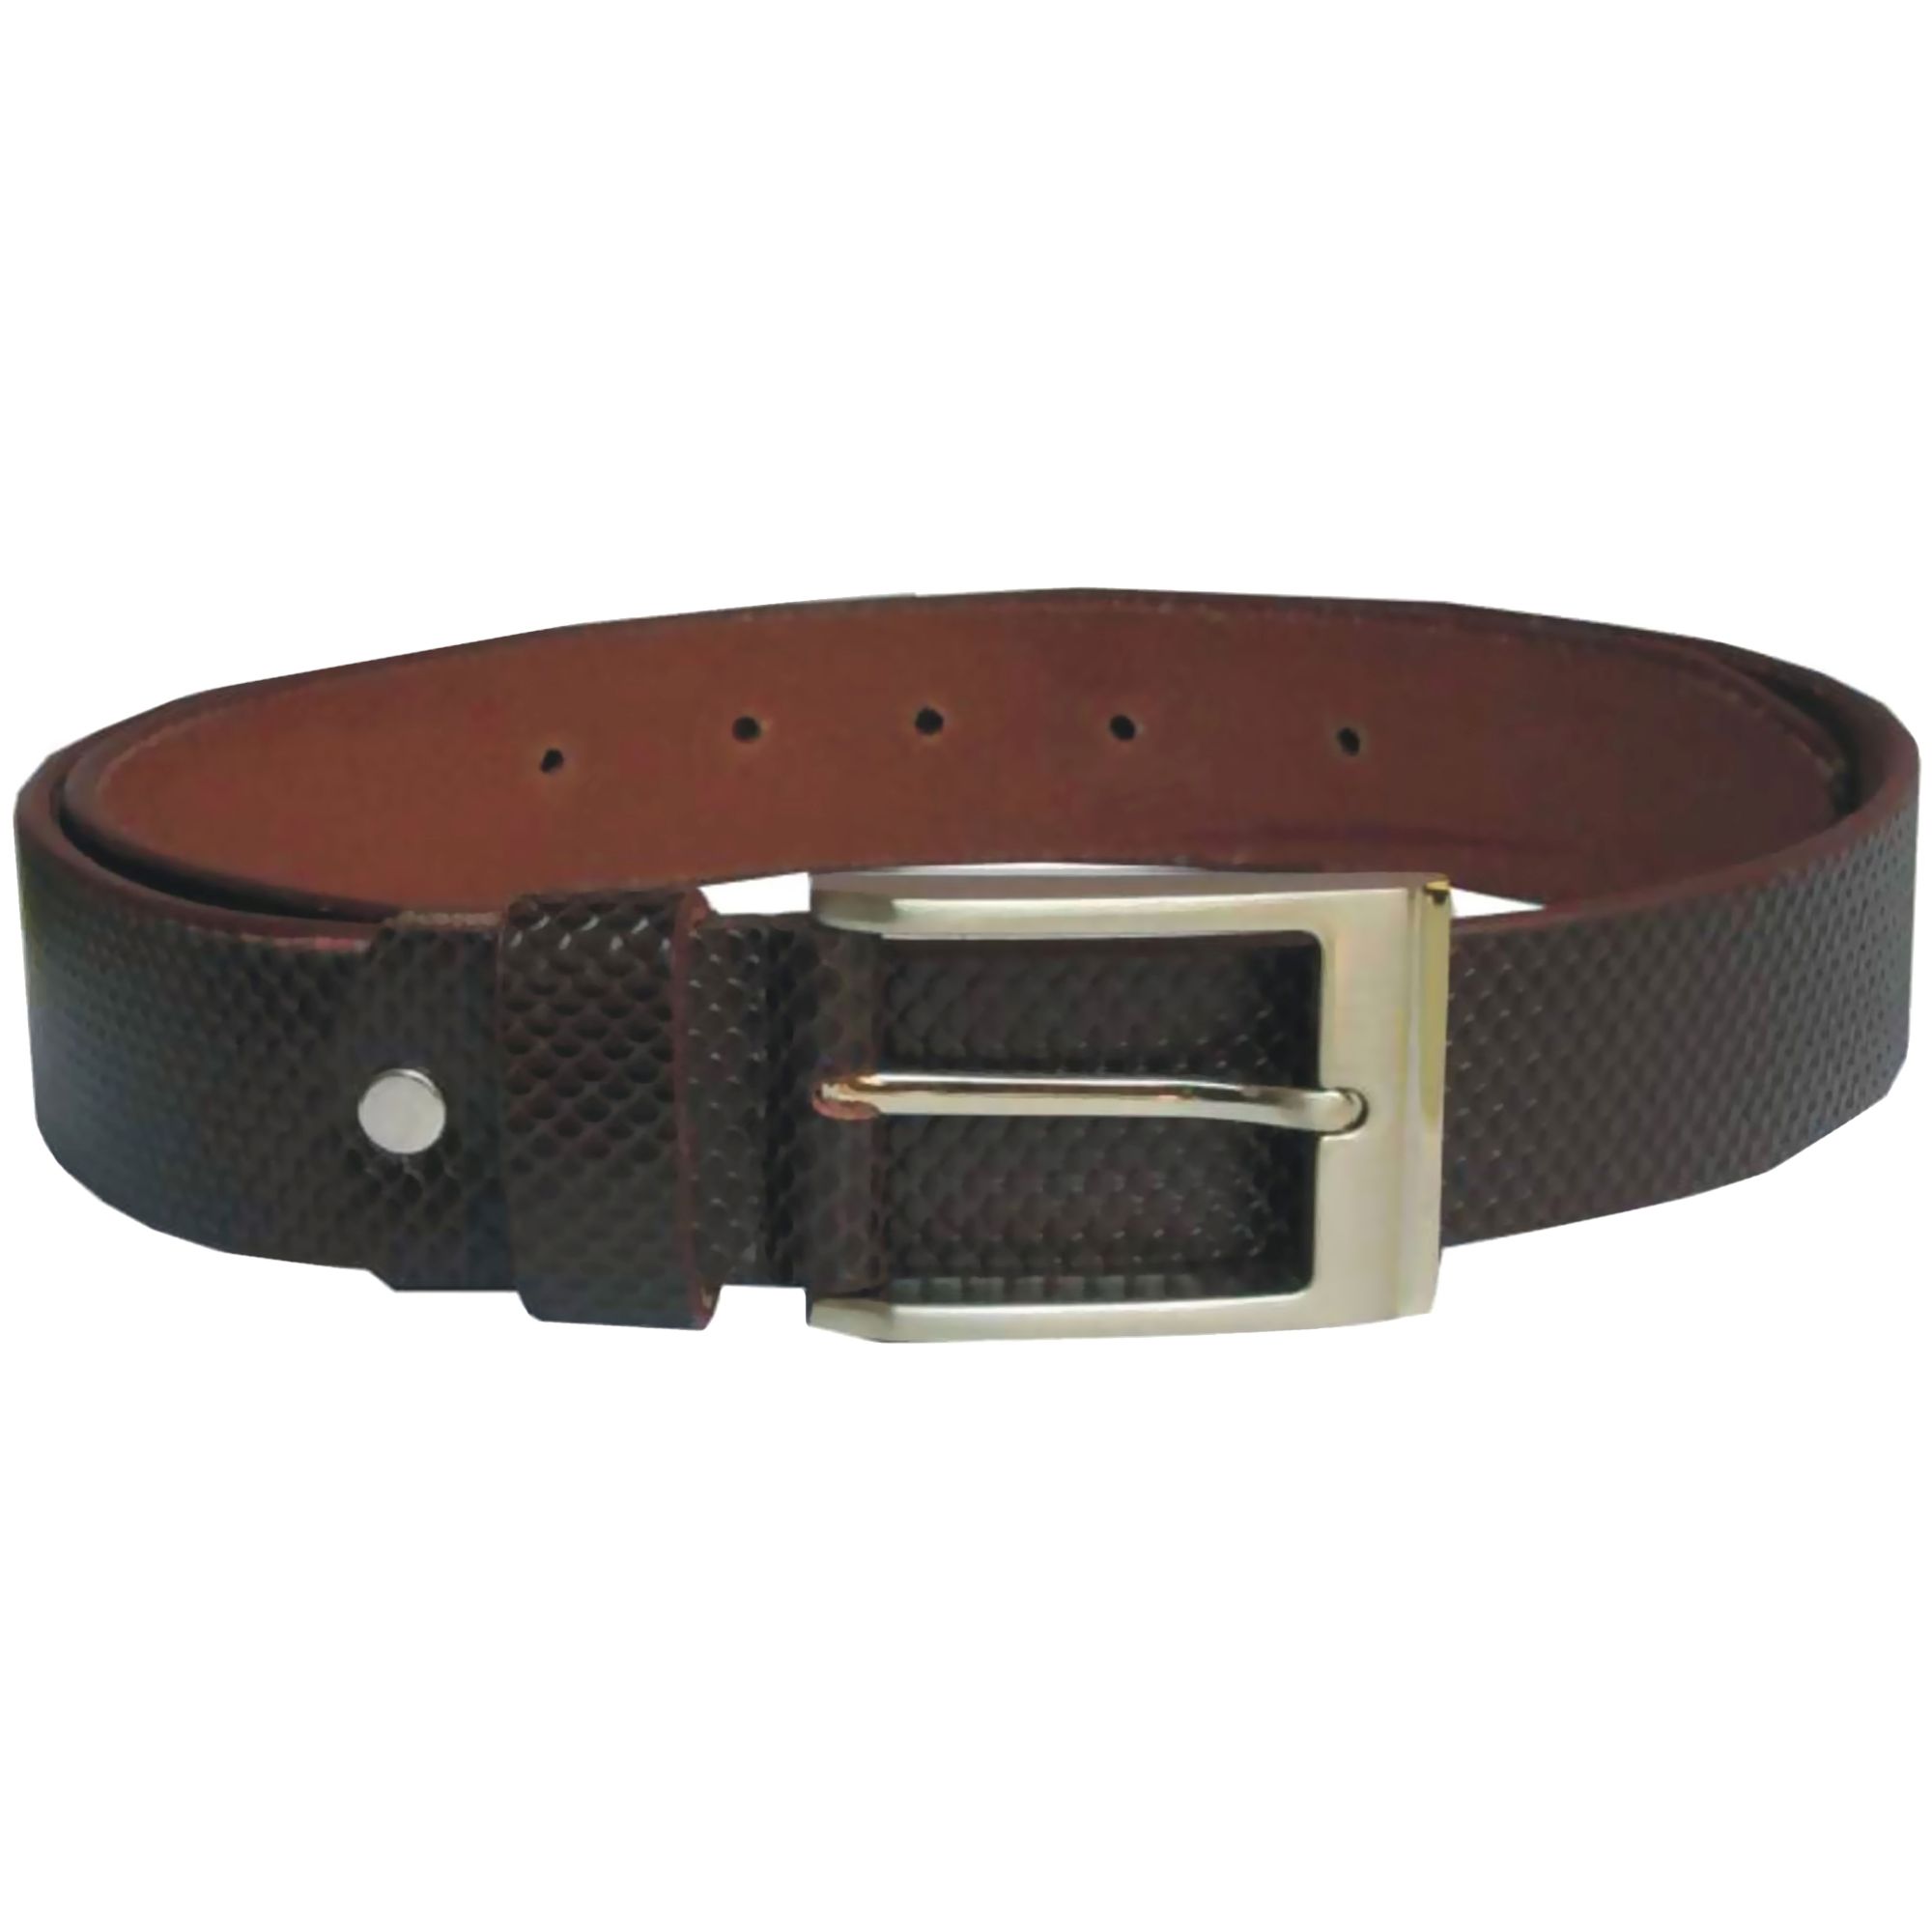 Debonair International Men's Solid Genuine Leather Belt with 6 Punch Holes, DI934272, Brown